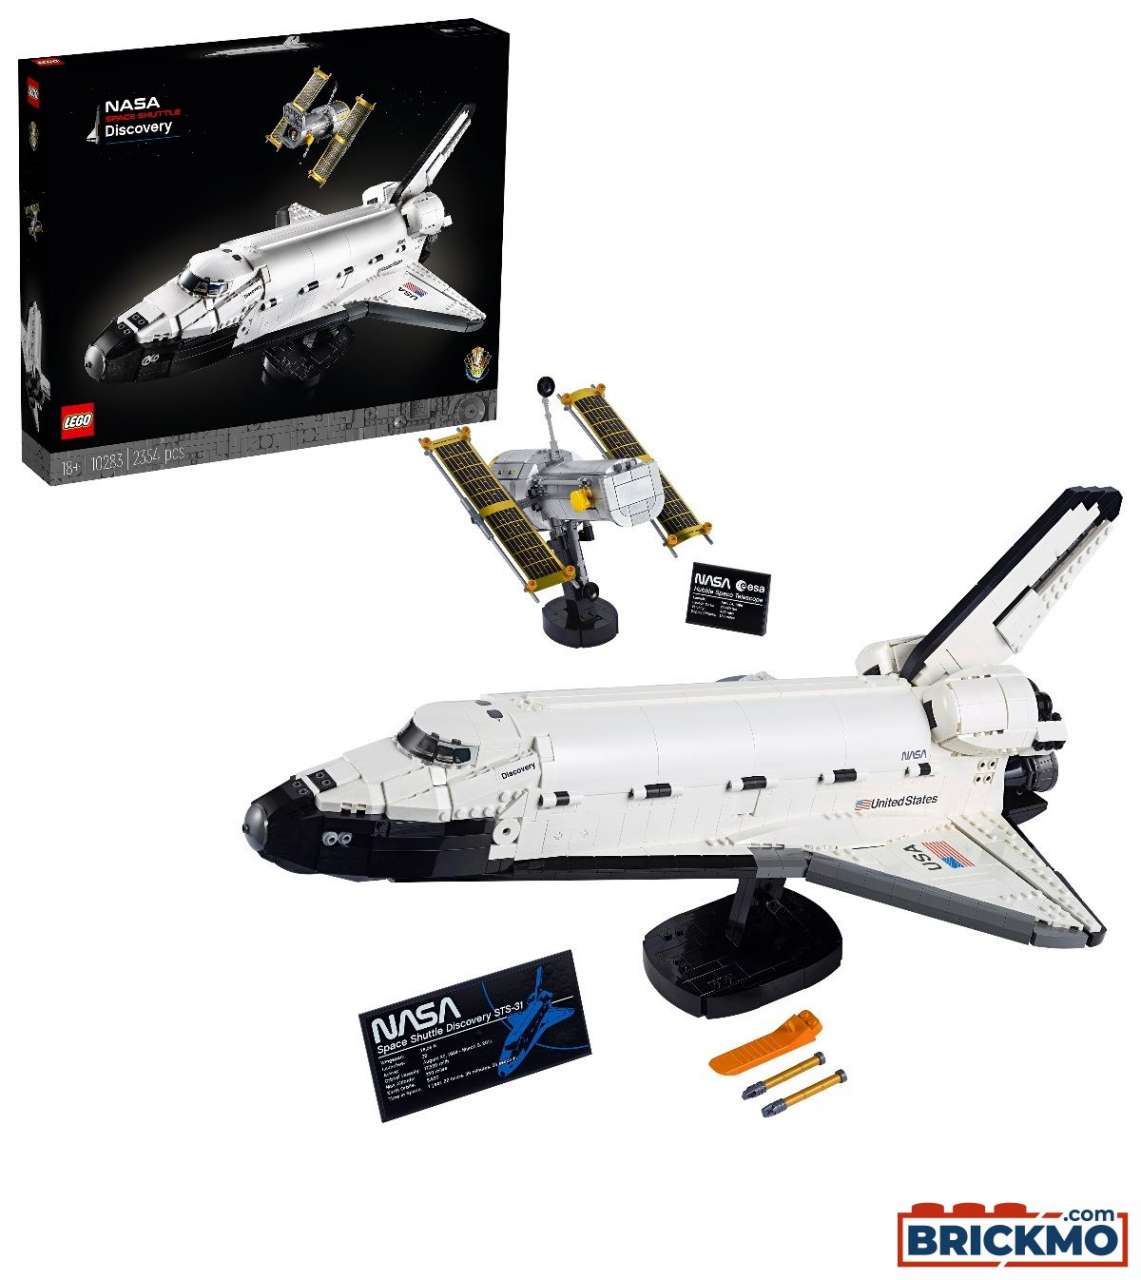 LEGO 10283 La navette spatiale Discovery de la NASA 10283